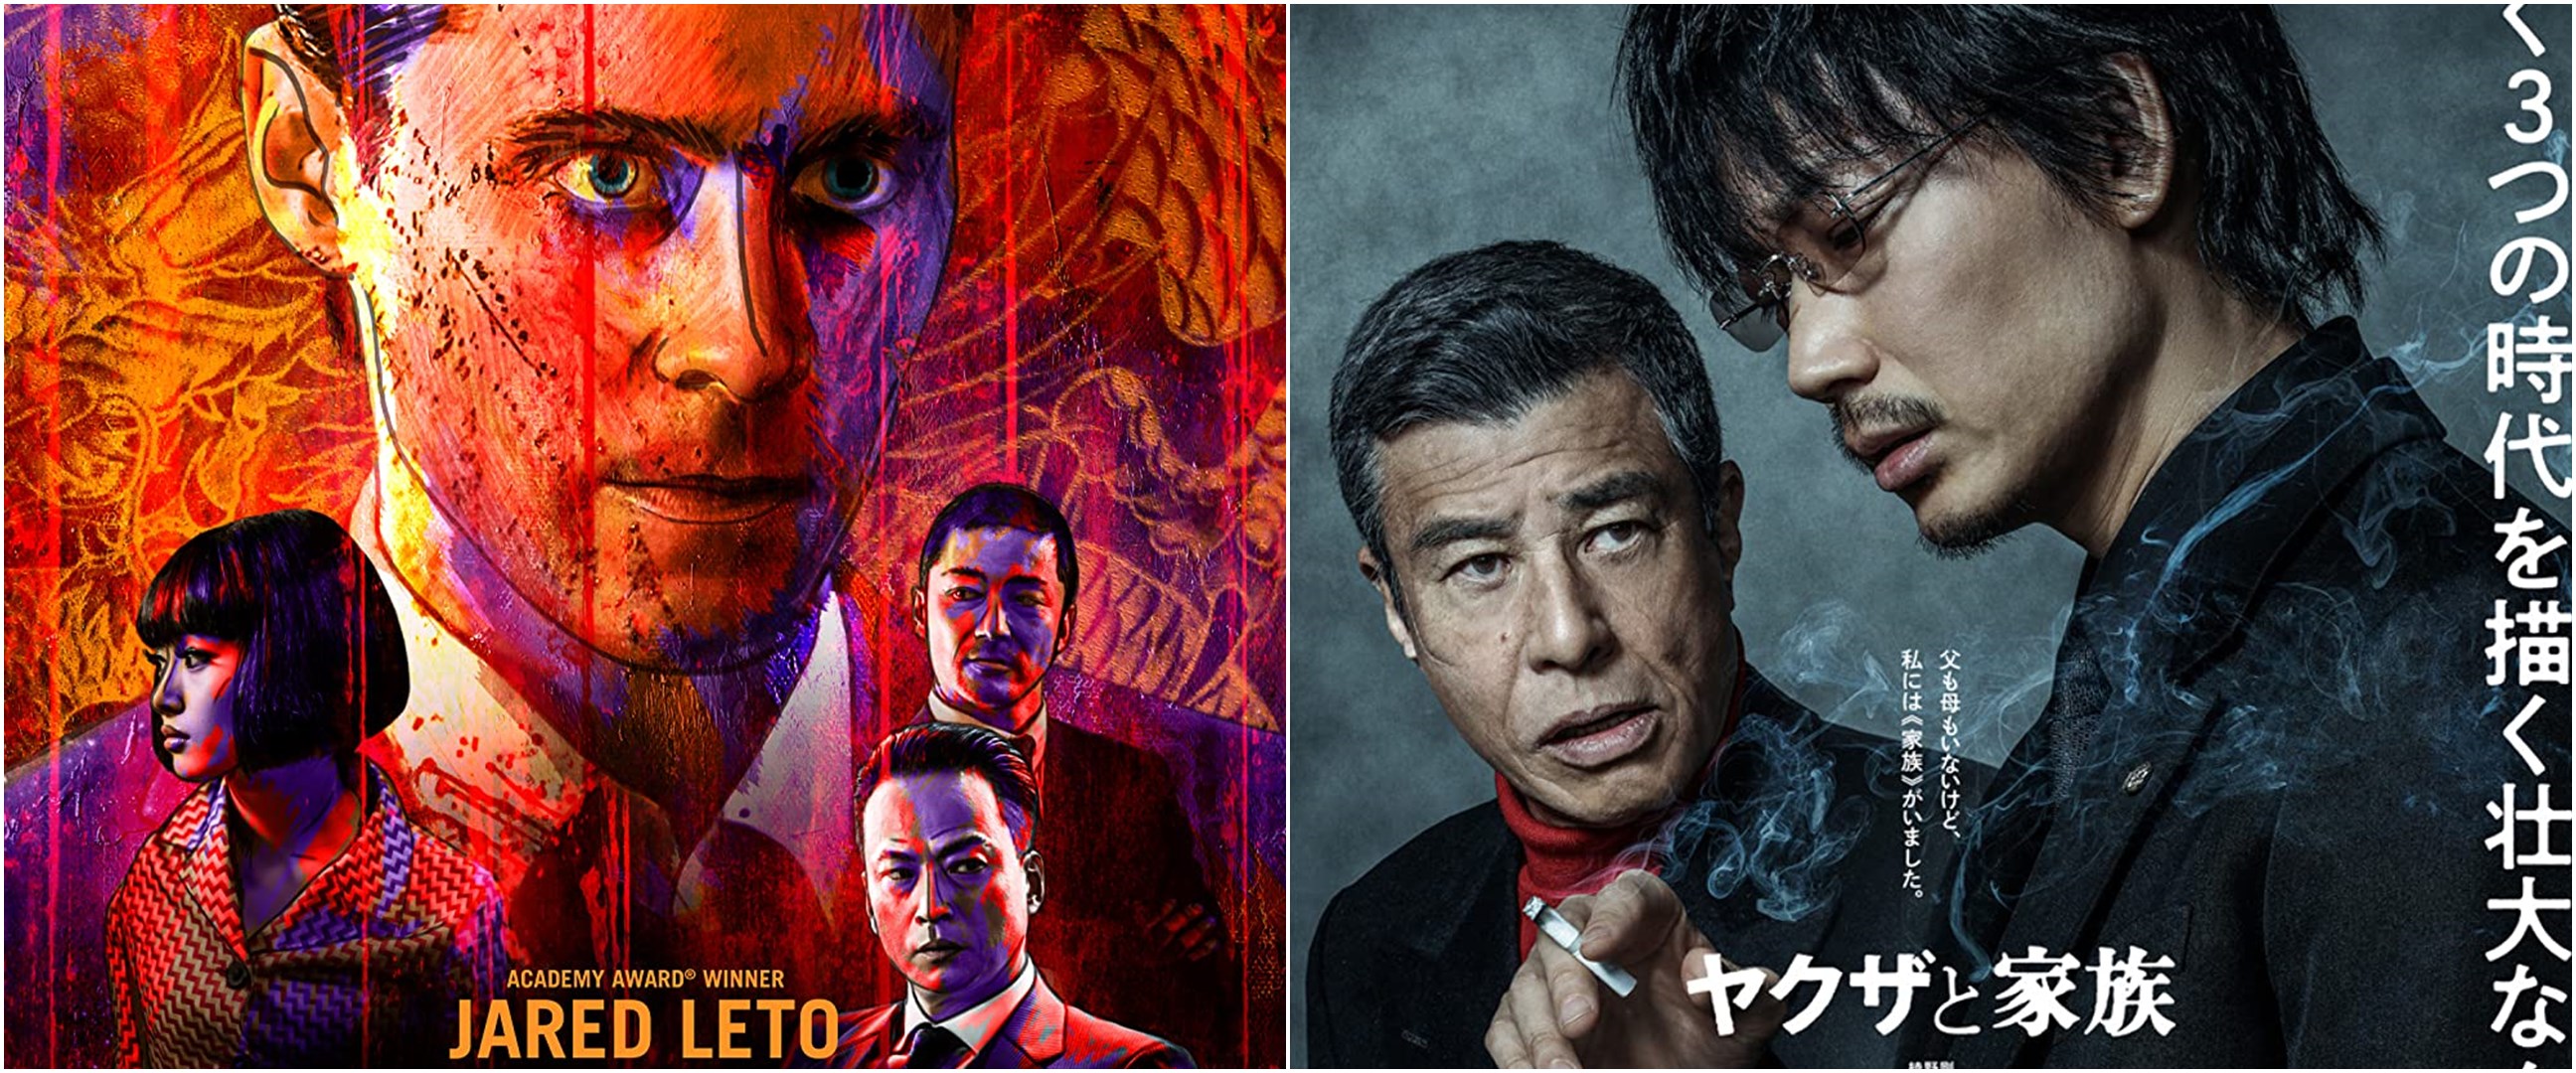 9 Film Netflix kisah tentang Yakuza, dihiasi aksi balas dendam